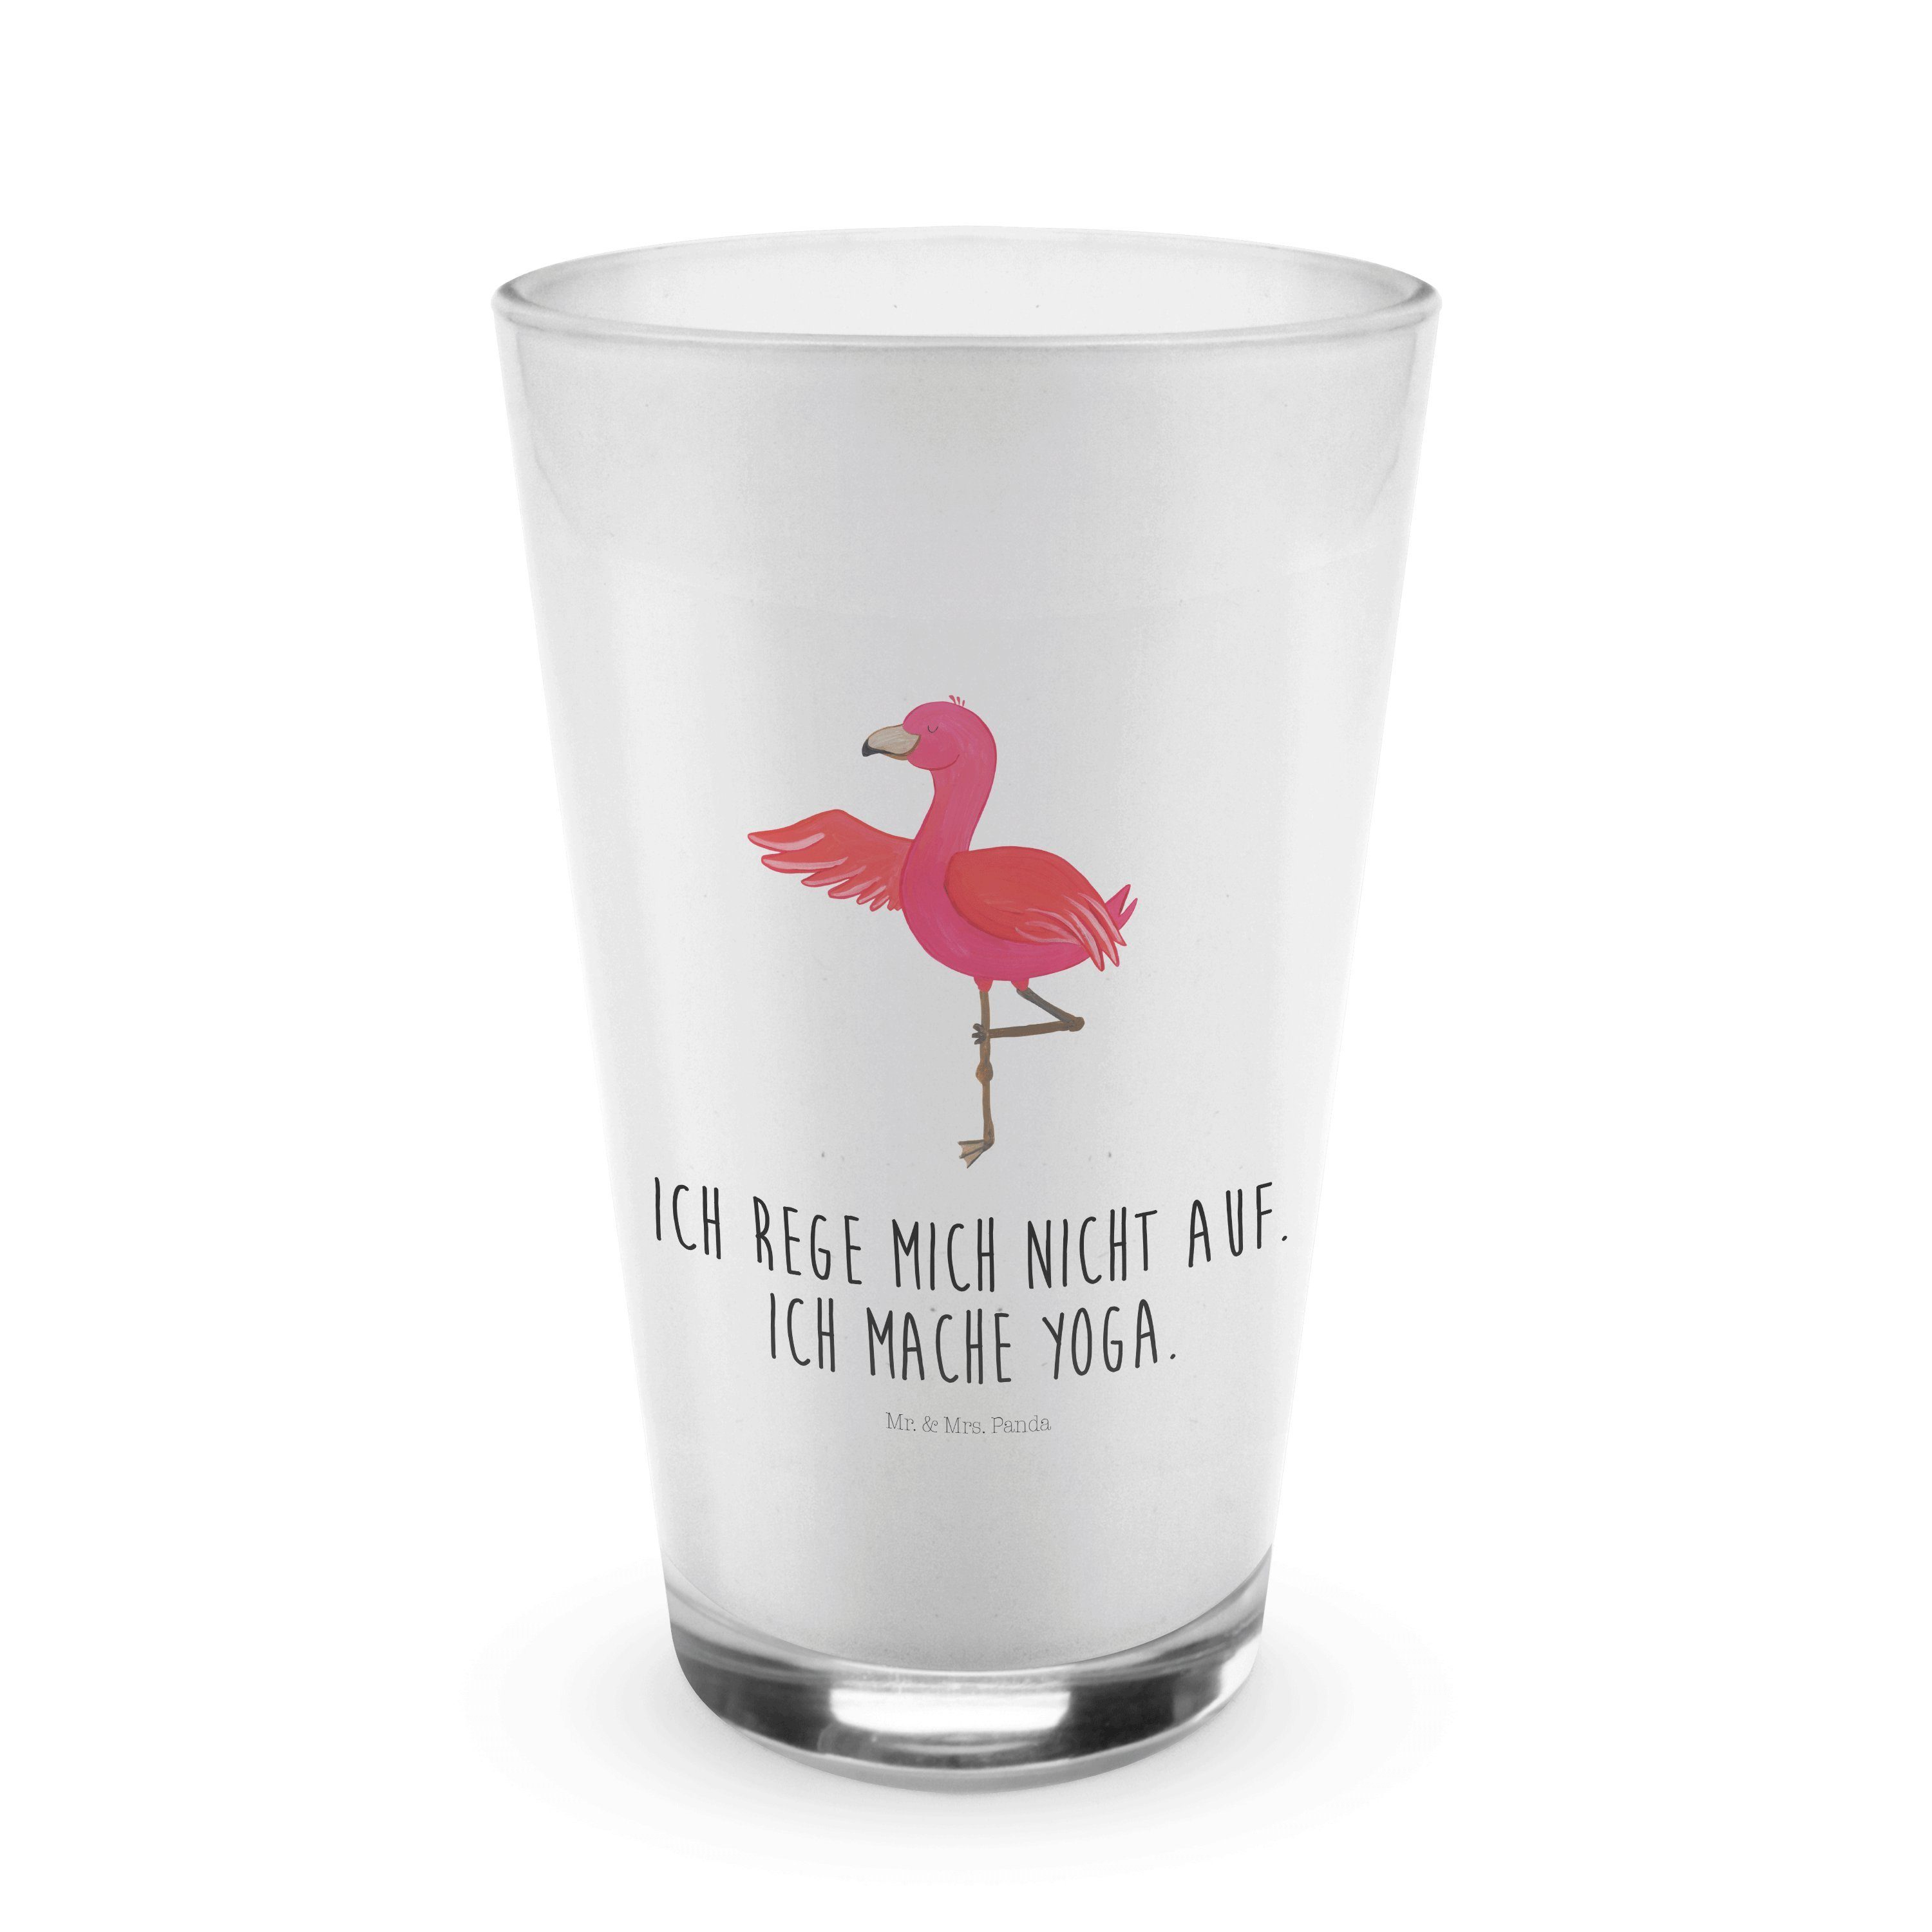 Mr. & Mrs. Panda Glas Yoga Macchiato, - Geschenk, - Flamingo Glas Latte Transparent Premium Yoga-Übung